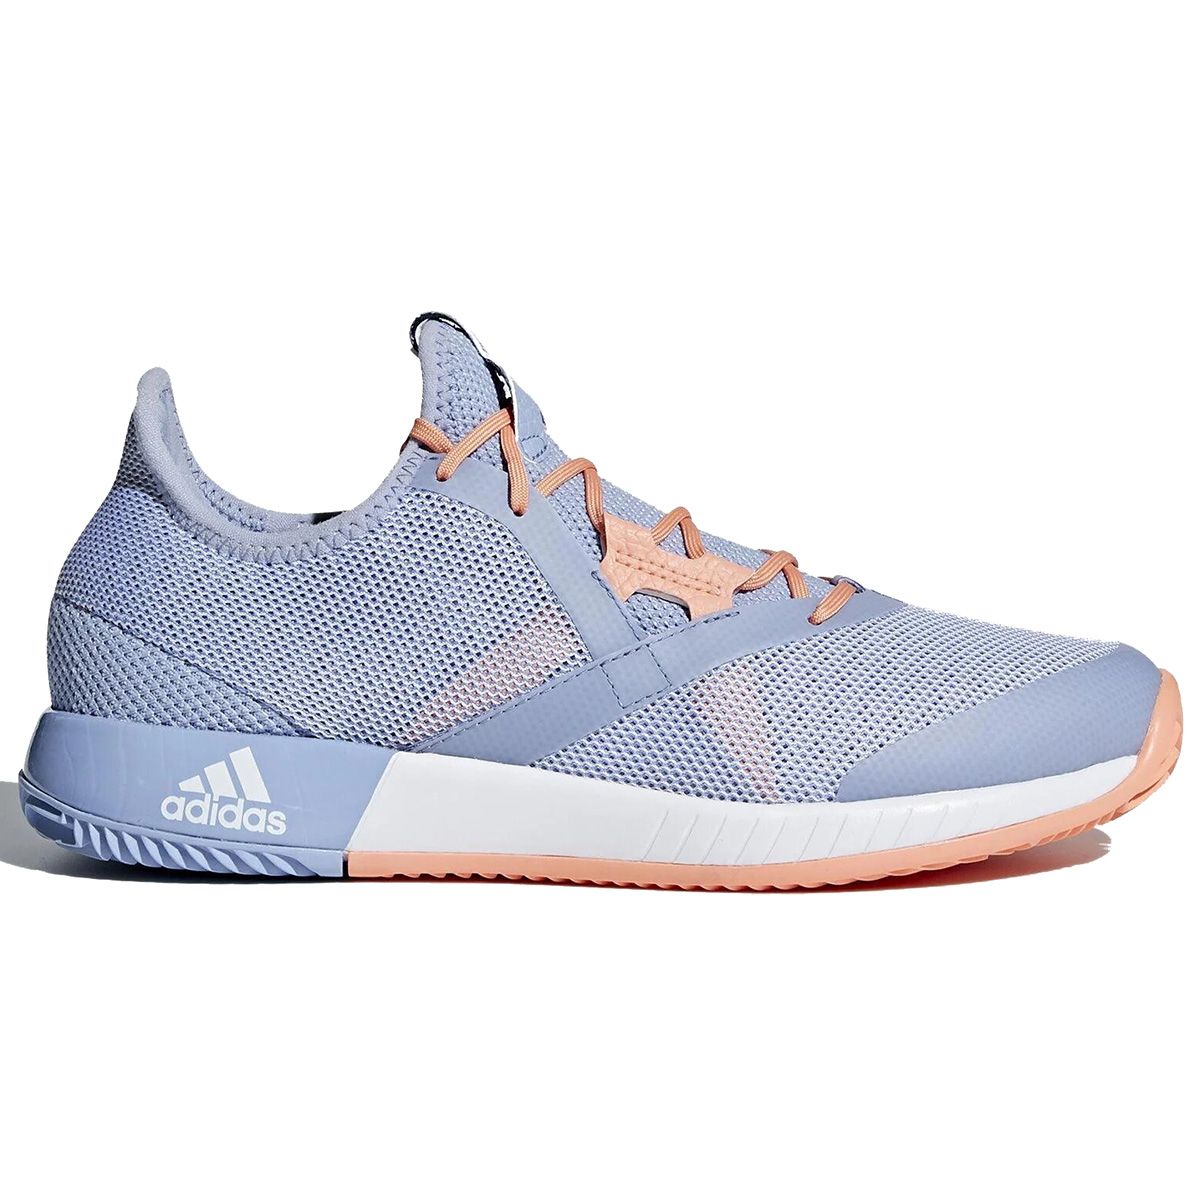 Adidas Adizero Defiant Bounce Women's Tennis Shoes CM7744